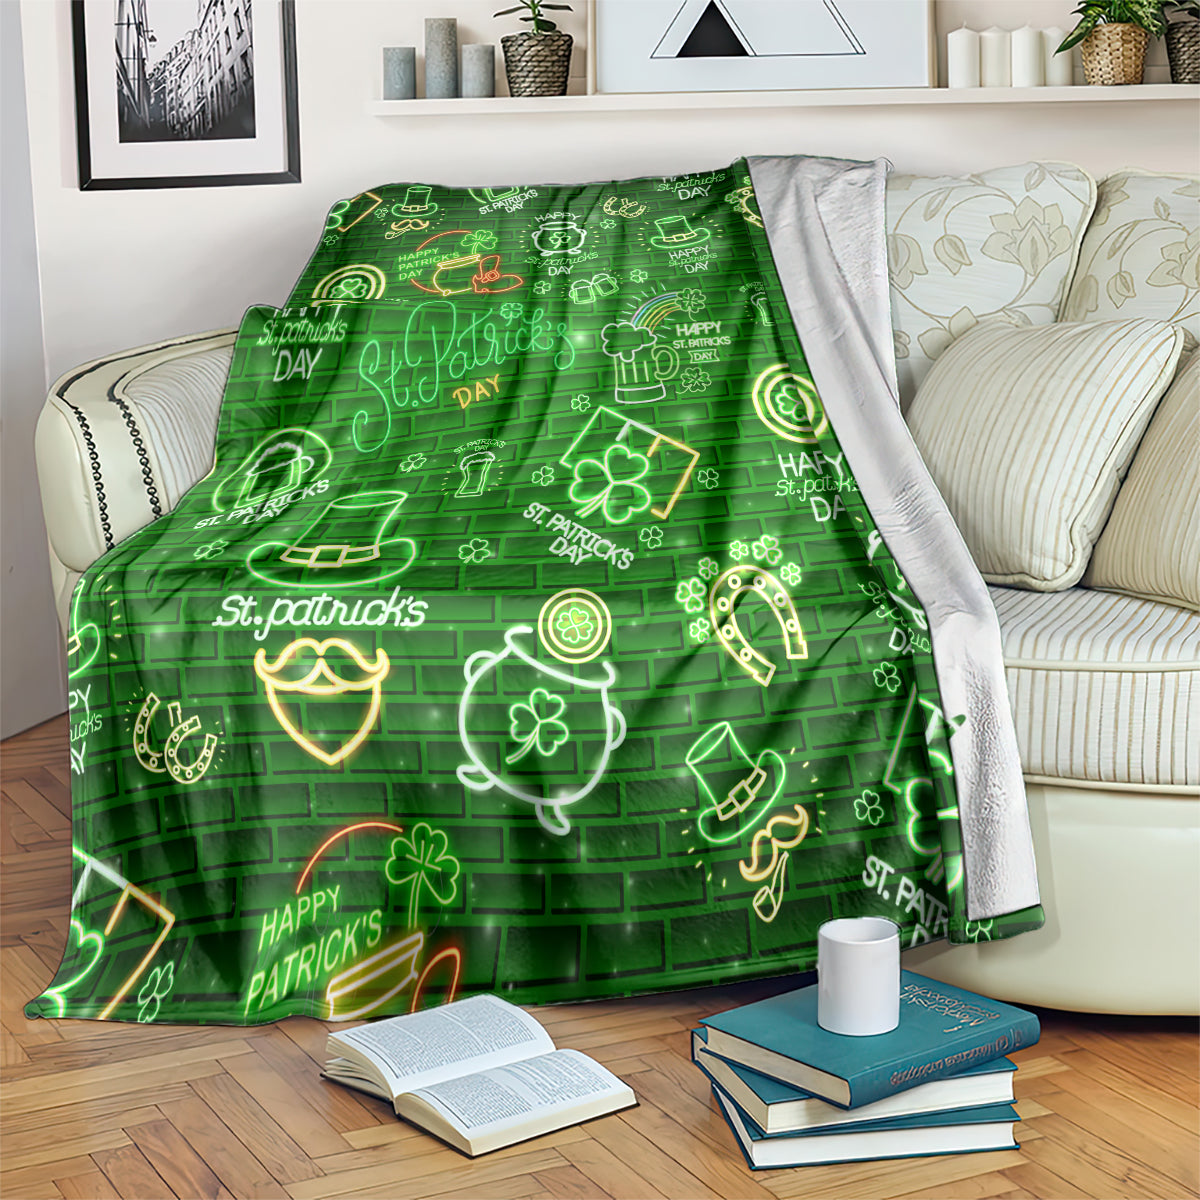 Ireland St Patrick's Day Blanket Symbols Neon